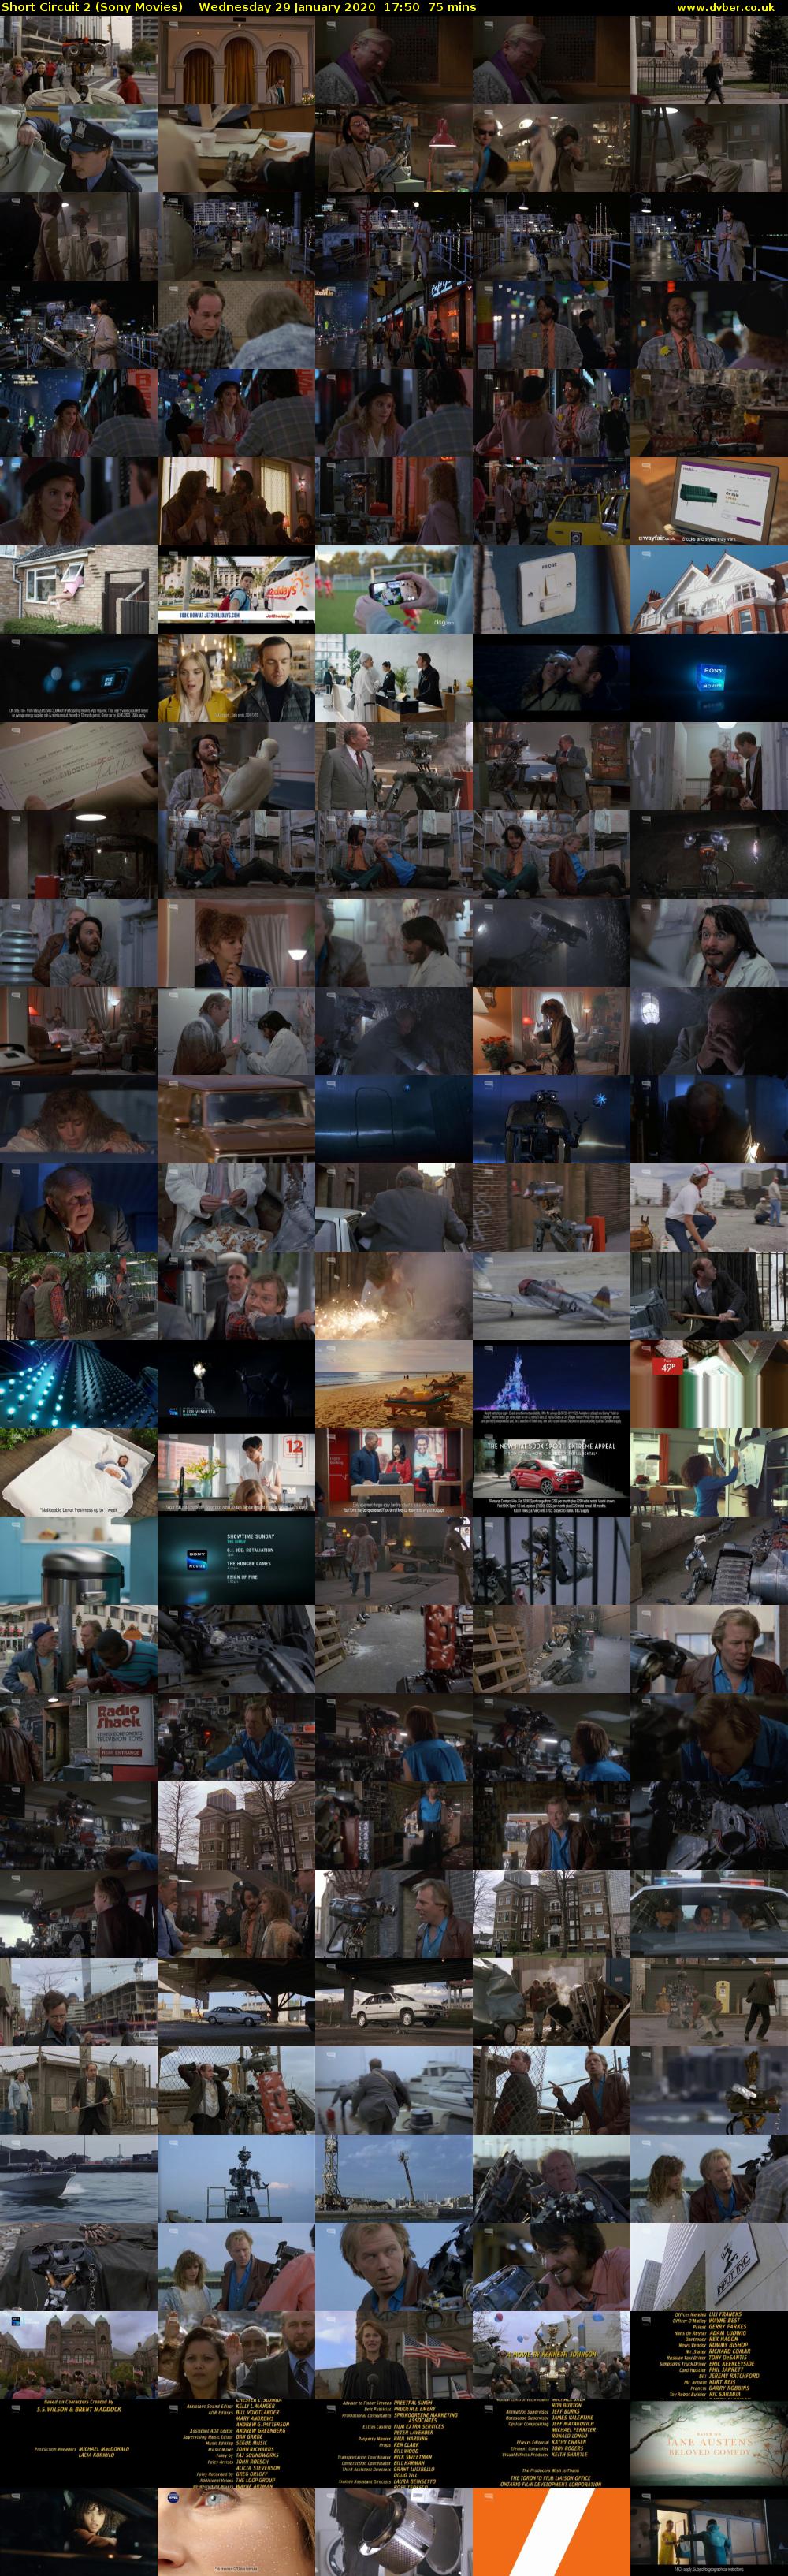 Short Circuit 2 (Sony Movies) Wednesday 29 January 2020 17:50 - 19:05